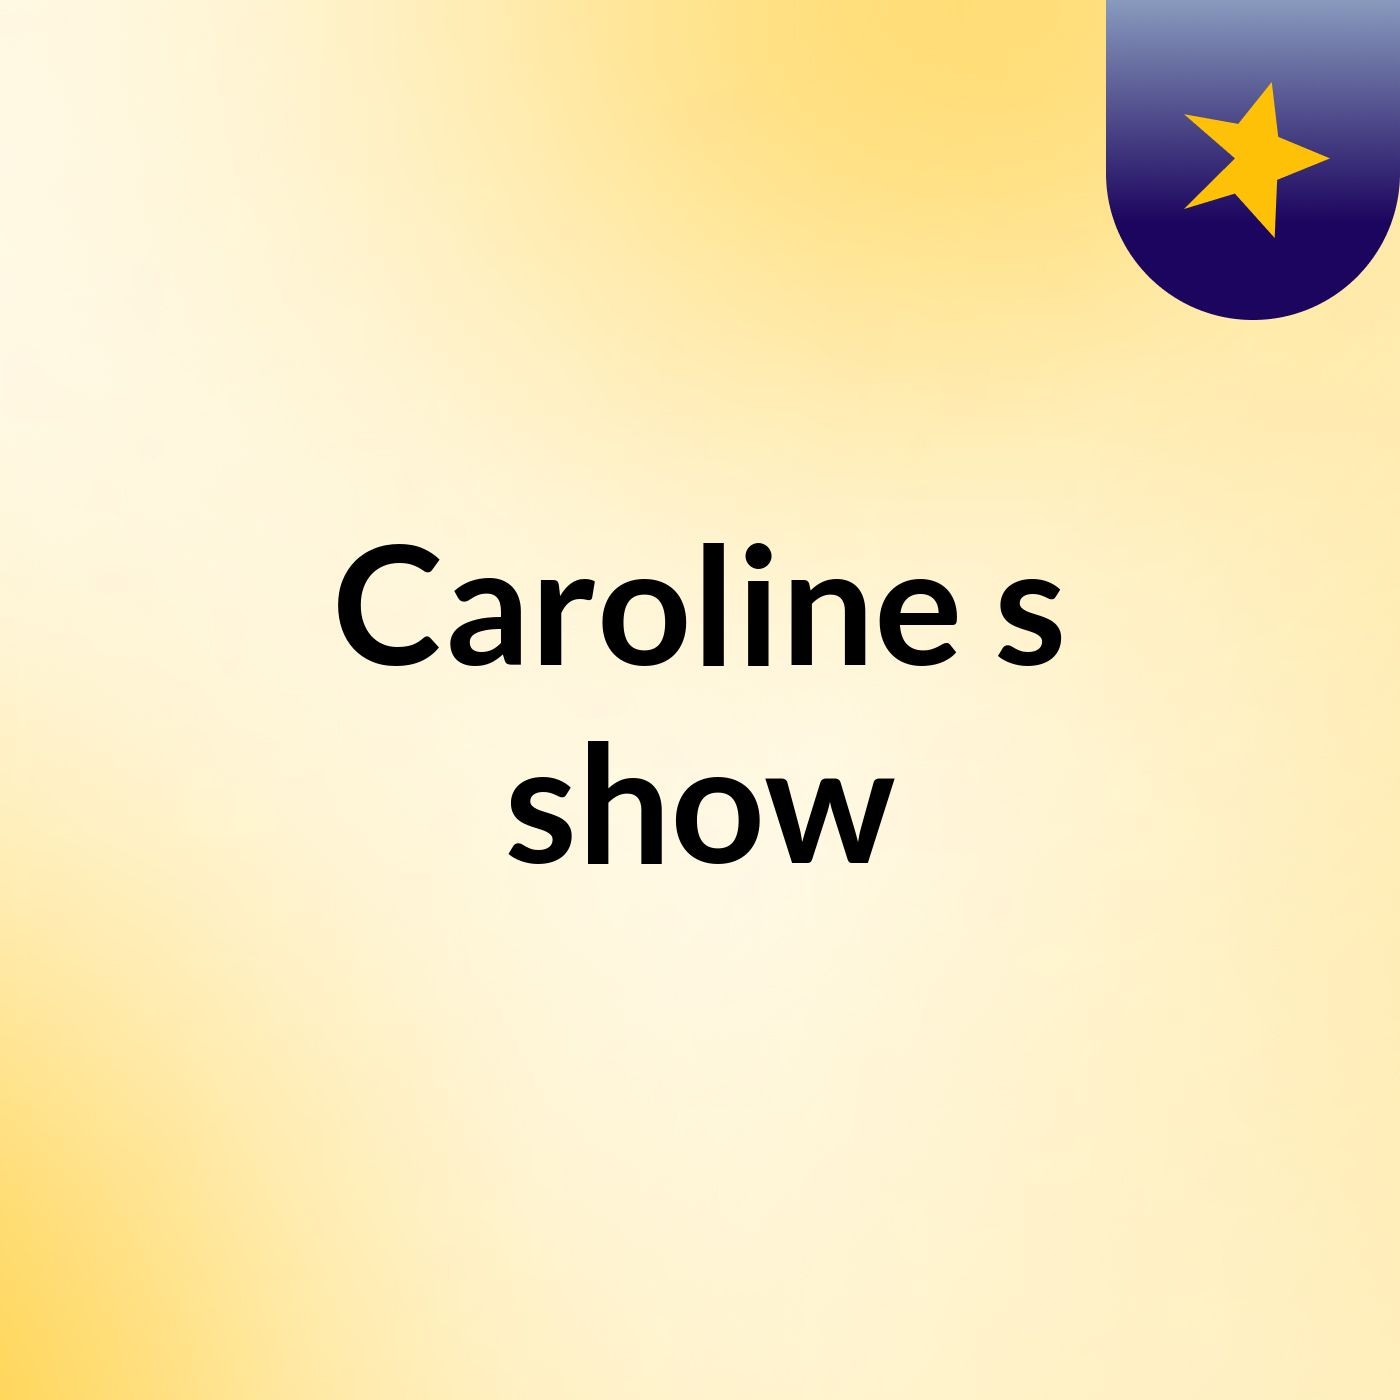 Caroline's show